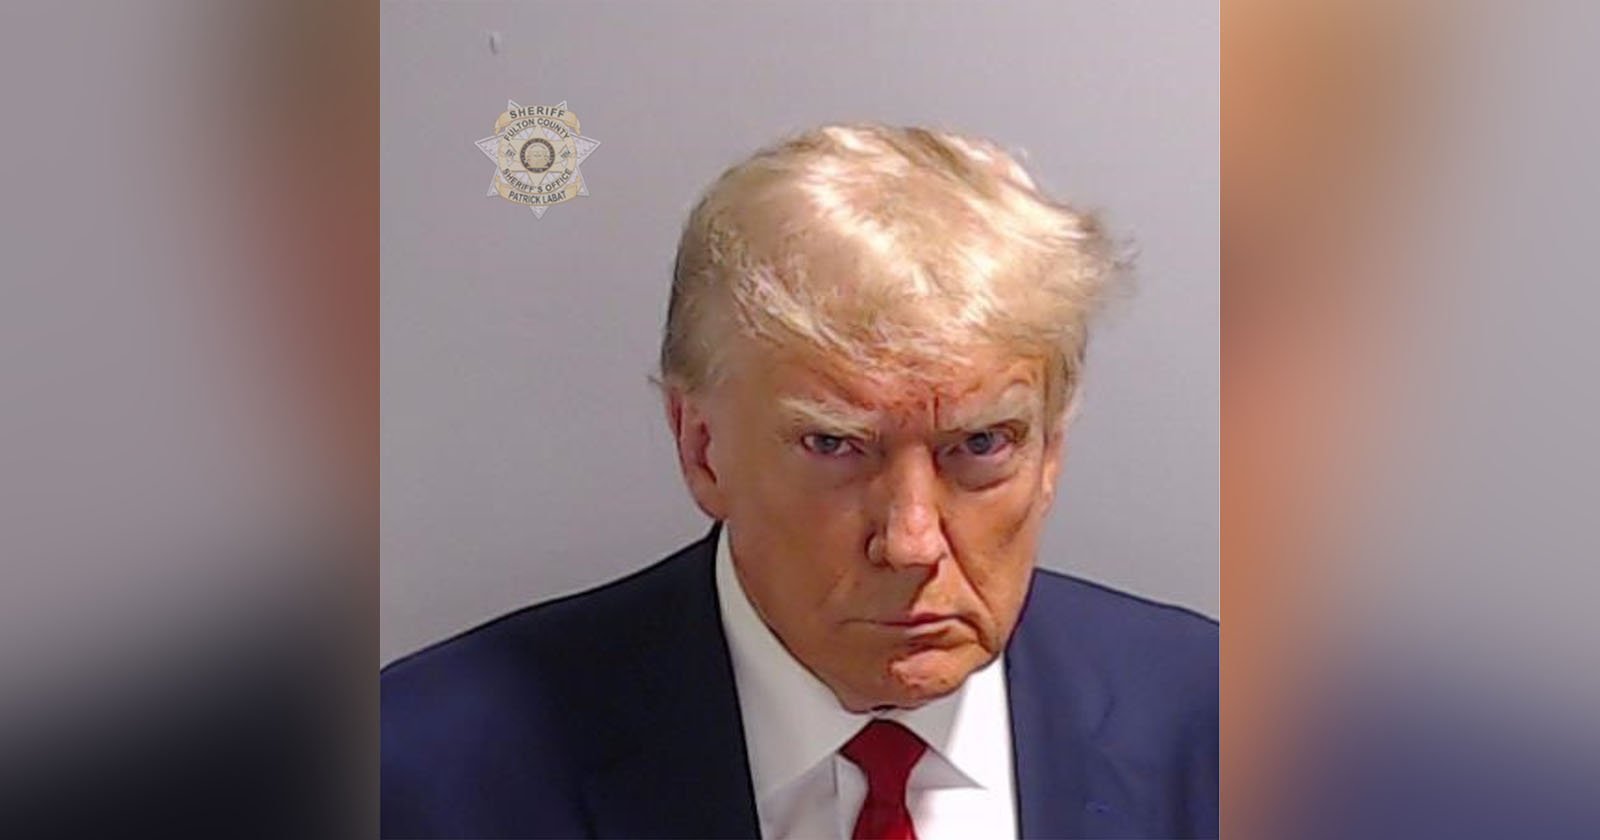 This is Former President Donald Trumps Mug Shot